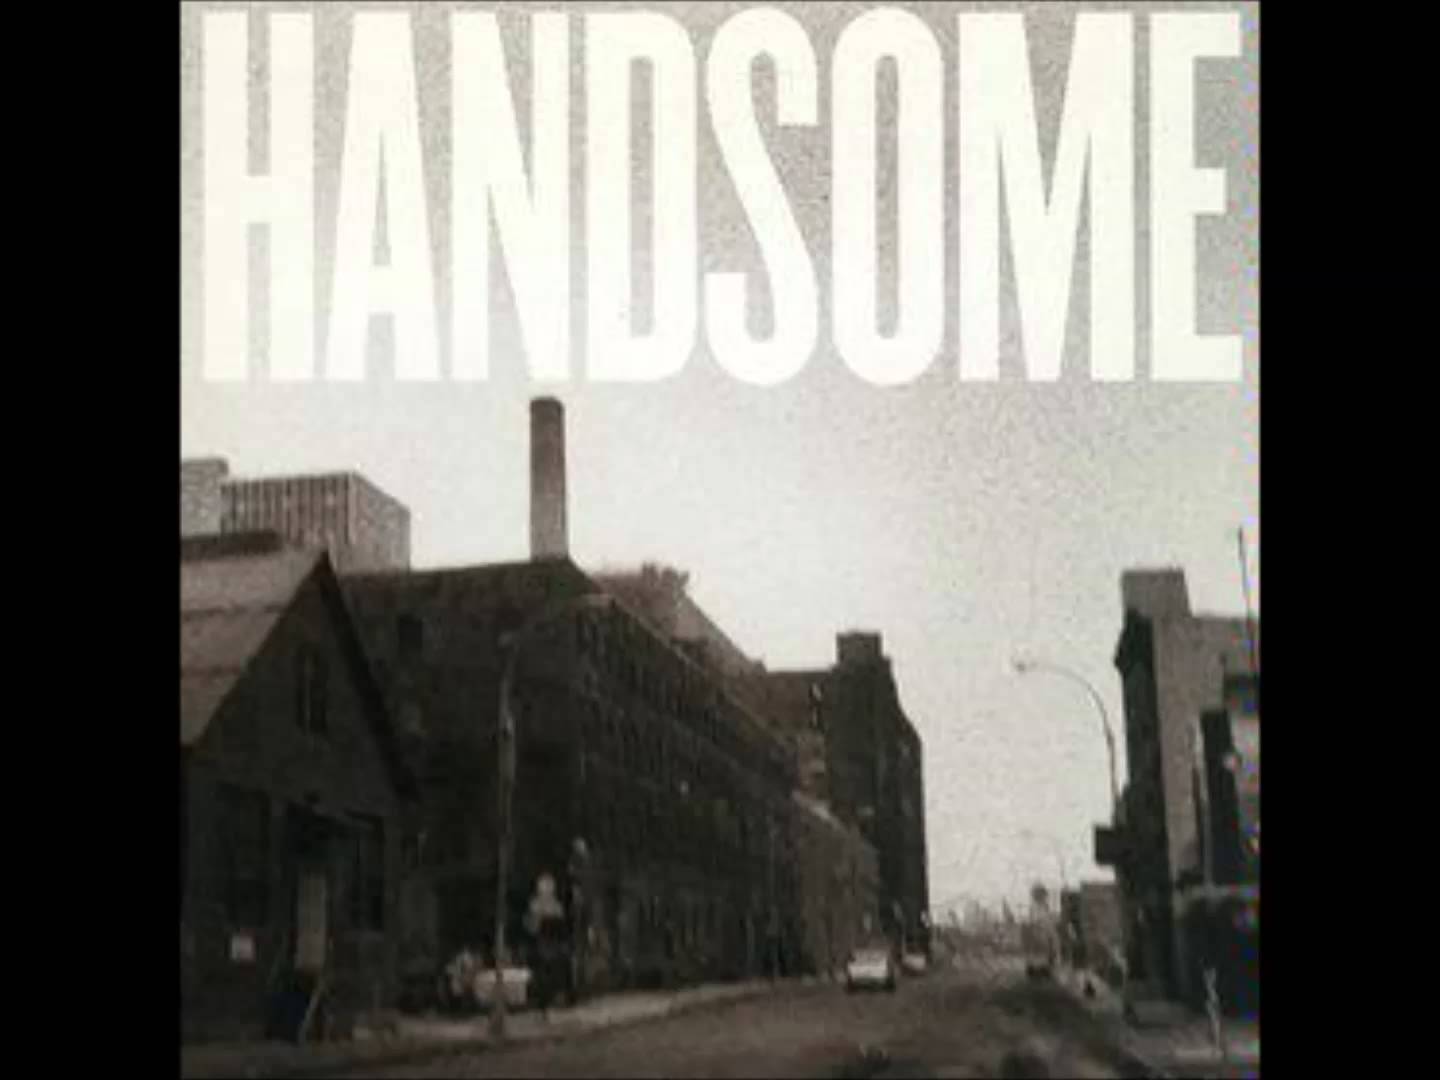 Handsome – Handsome album cover